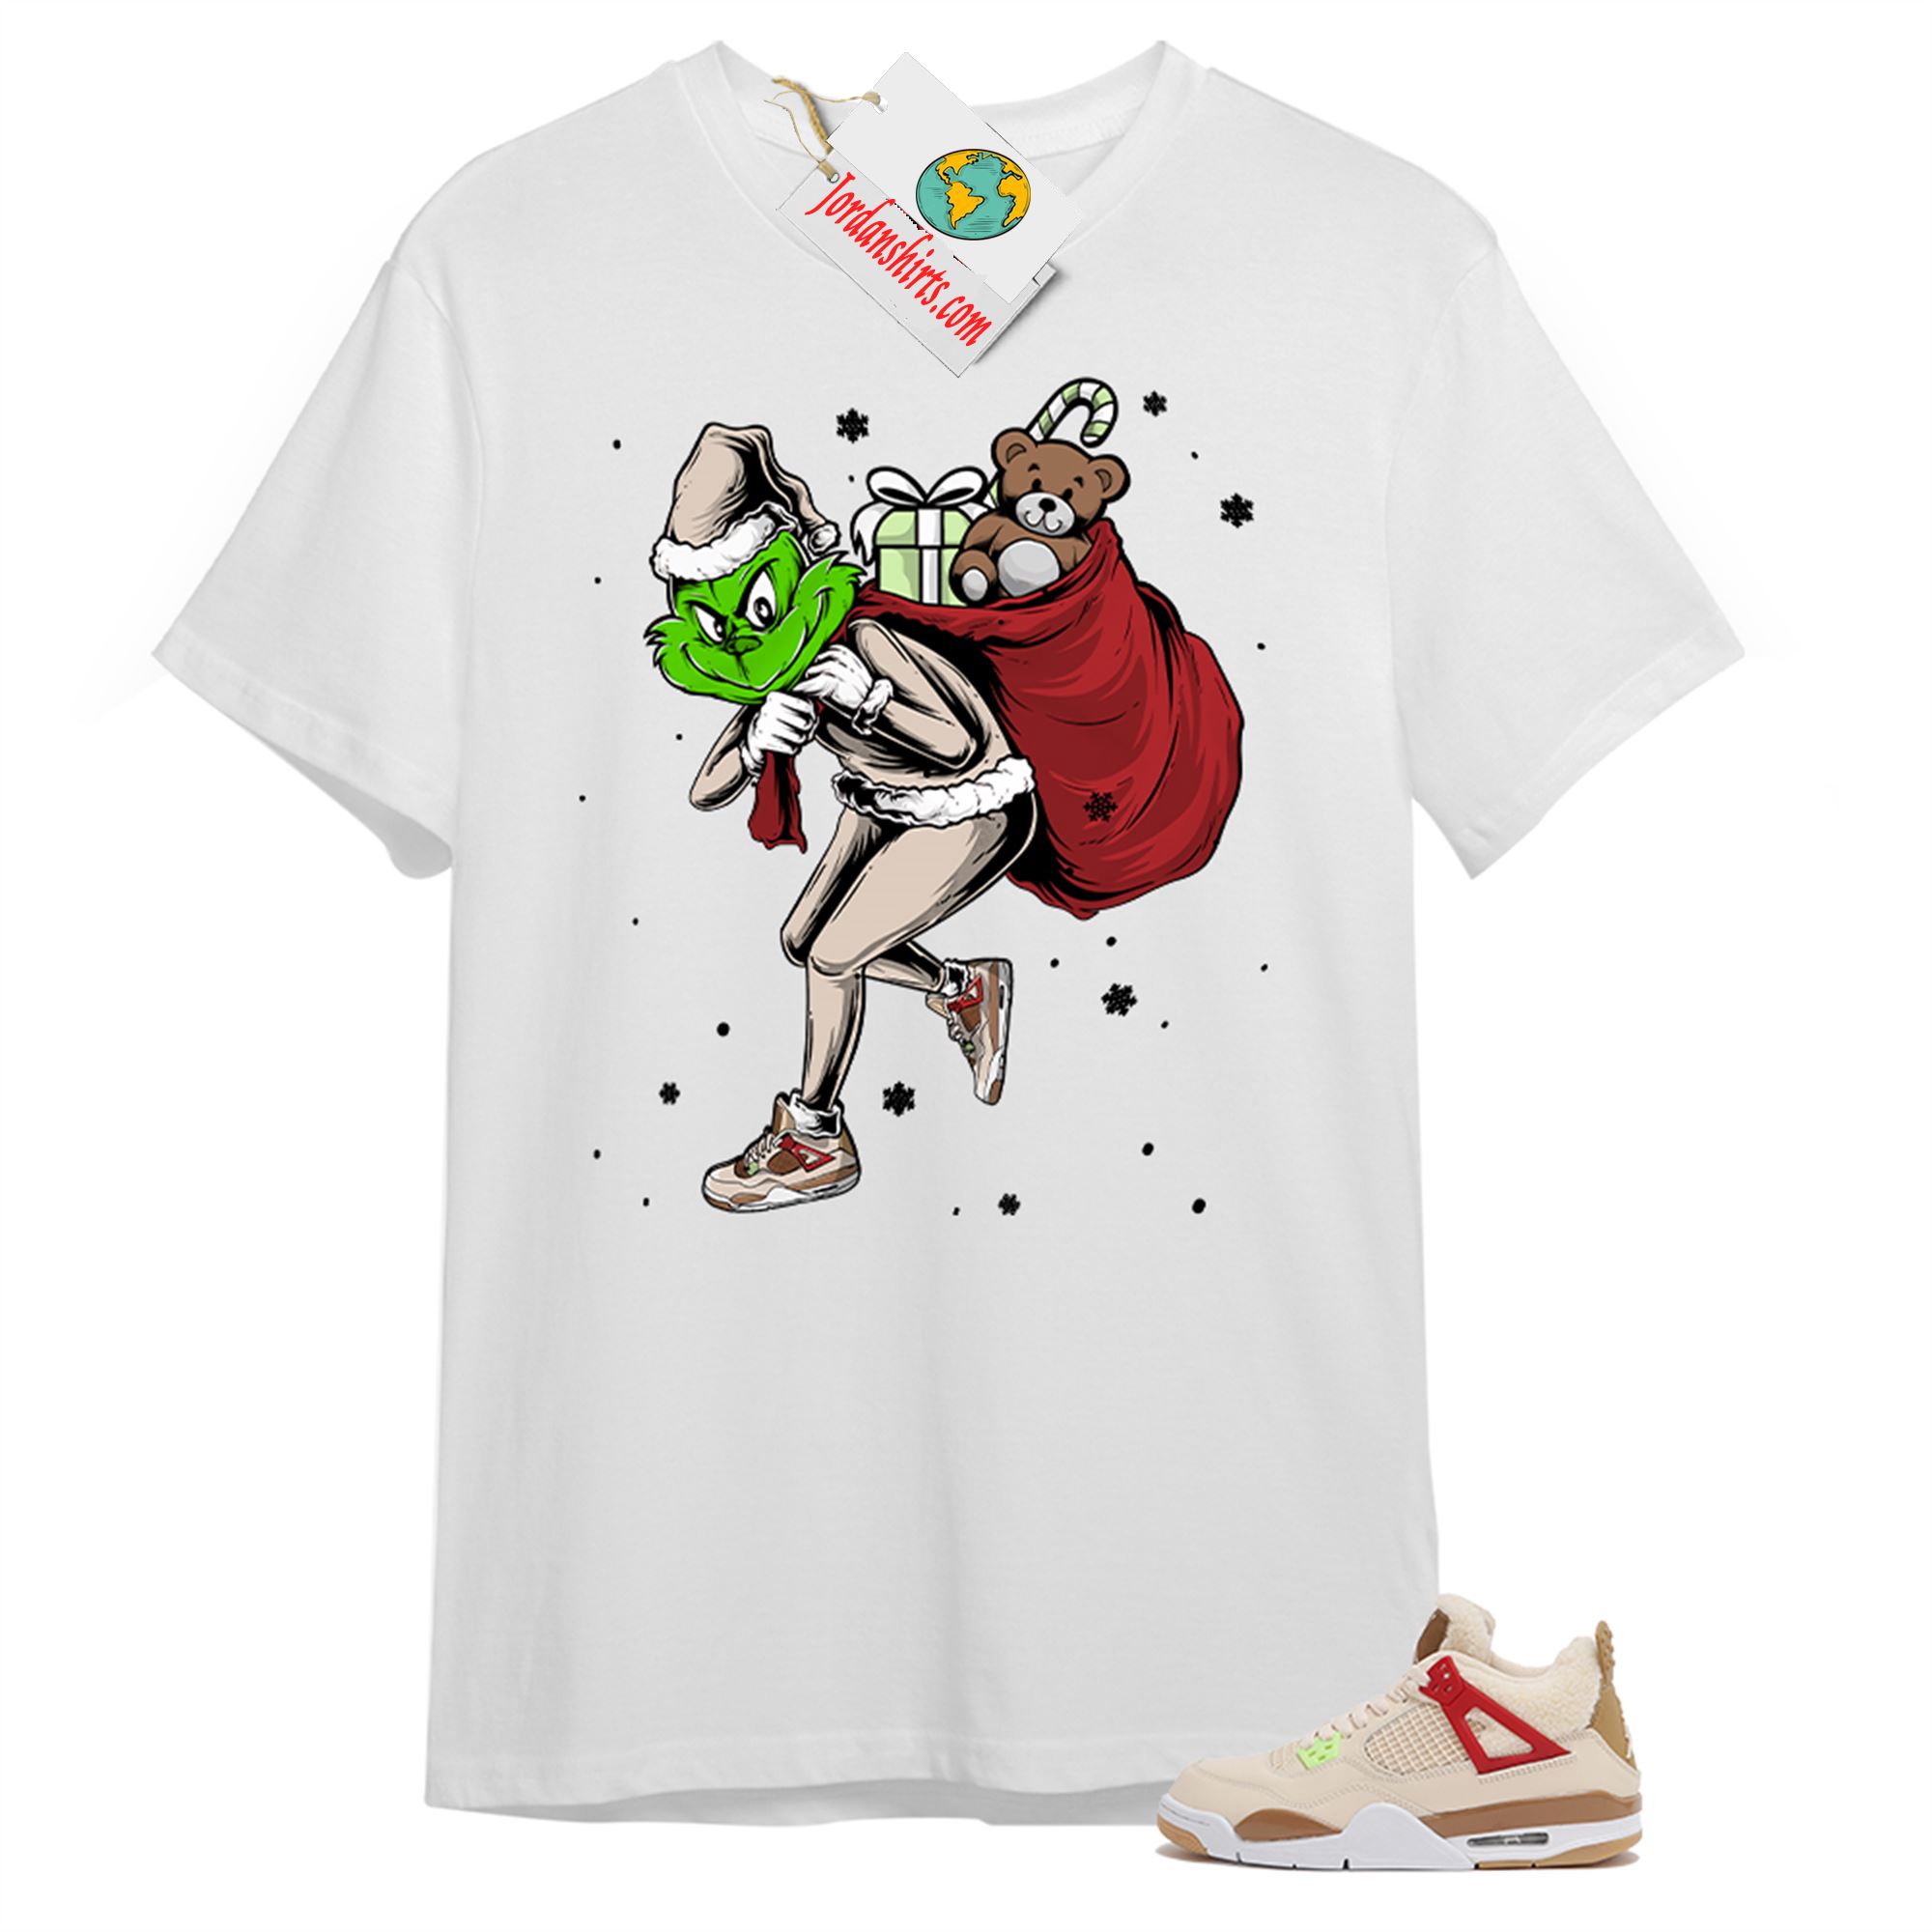 Jordan 4 Shirt, Grinch Stolen Christmas White T-shirt Air Jordan 4 Wild Things 4s Plus Size Up To 5xl